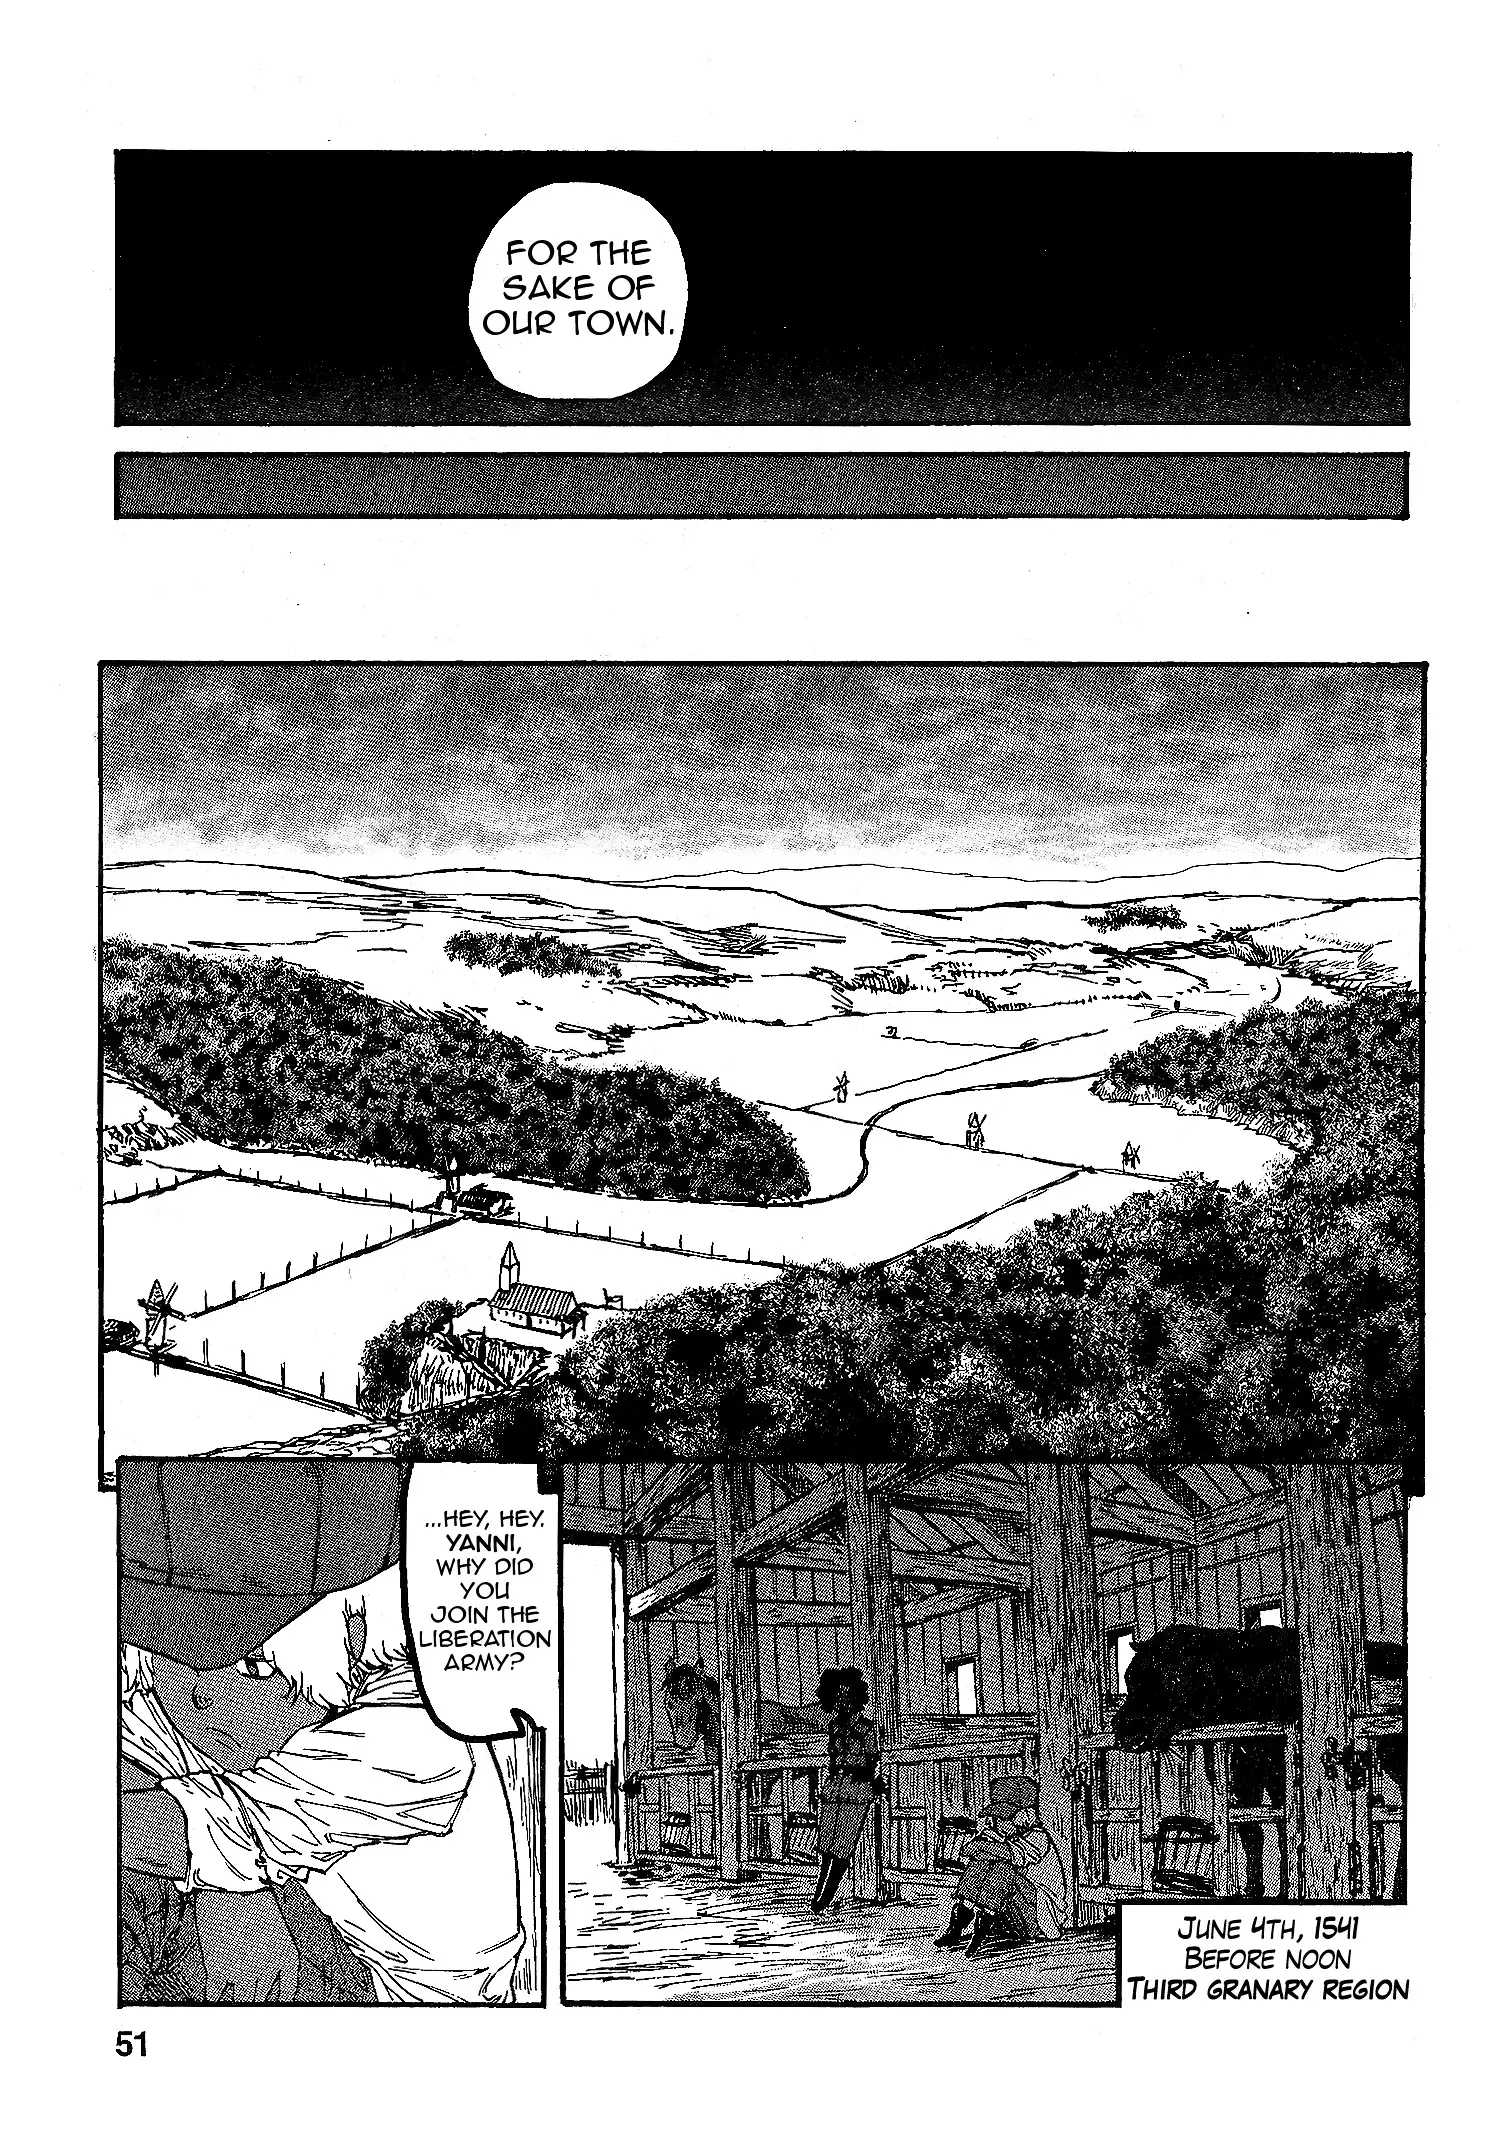 Groundless - Sekigan No Sogekihei - 15 page 15-29decc06